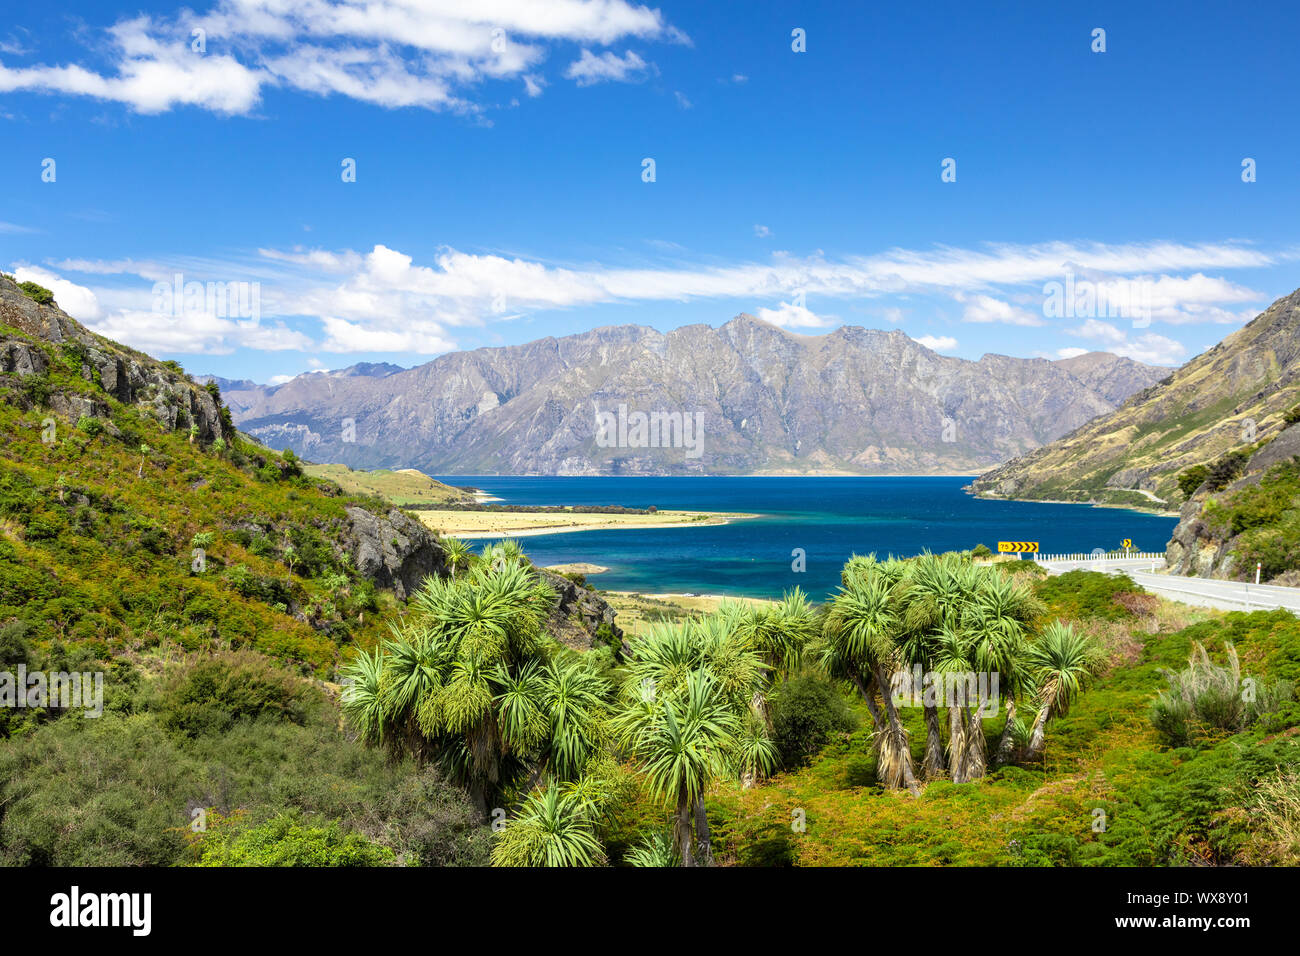 Il lago Wanaka; Nuova Zelanda isola del sud Foto Stock